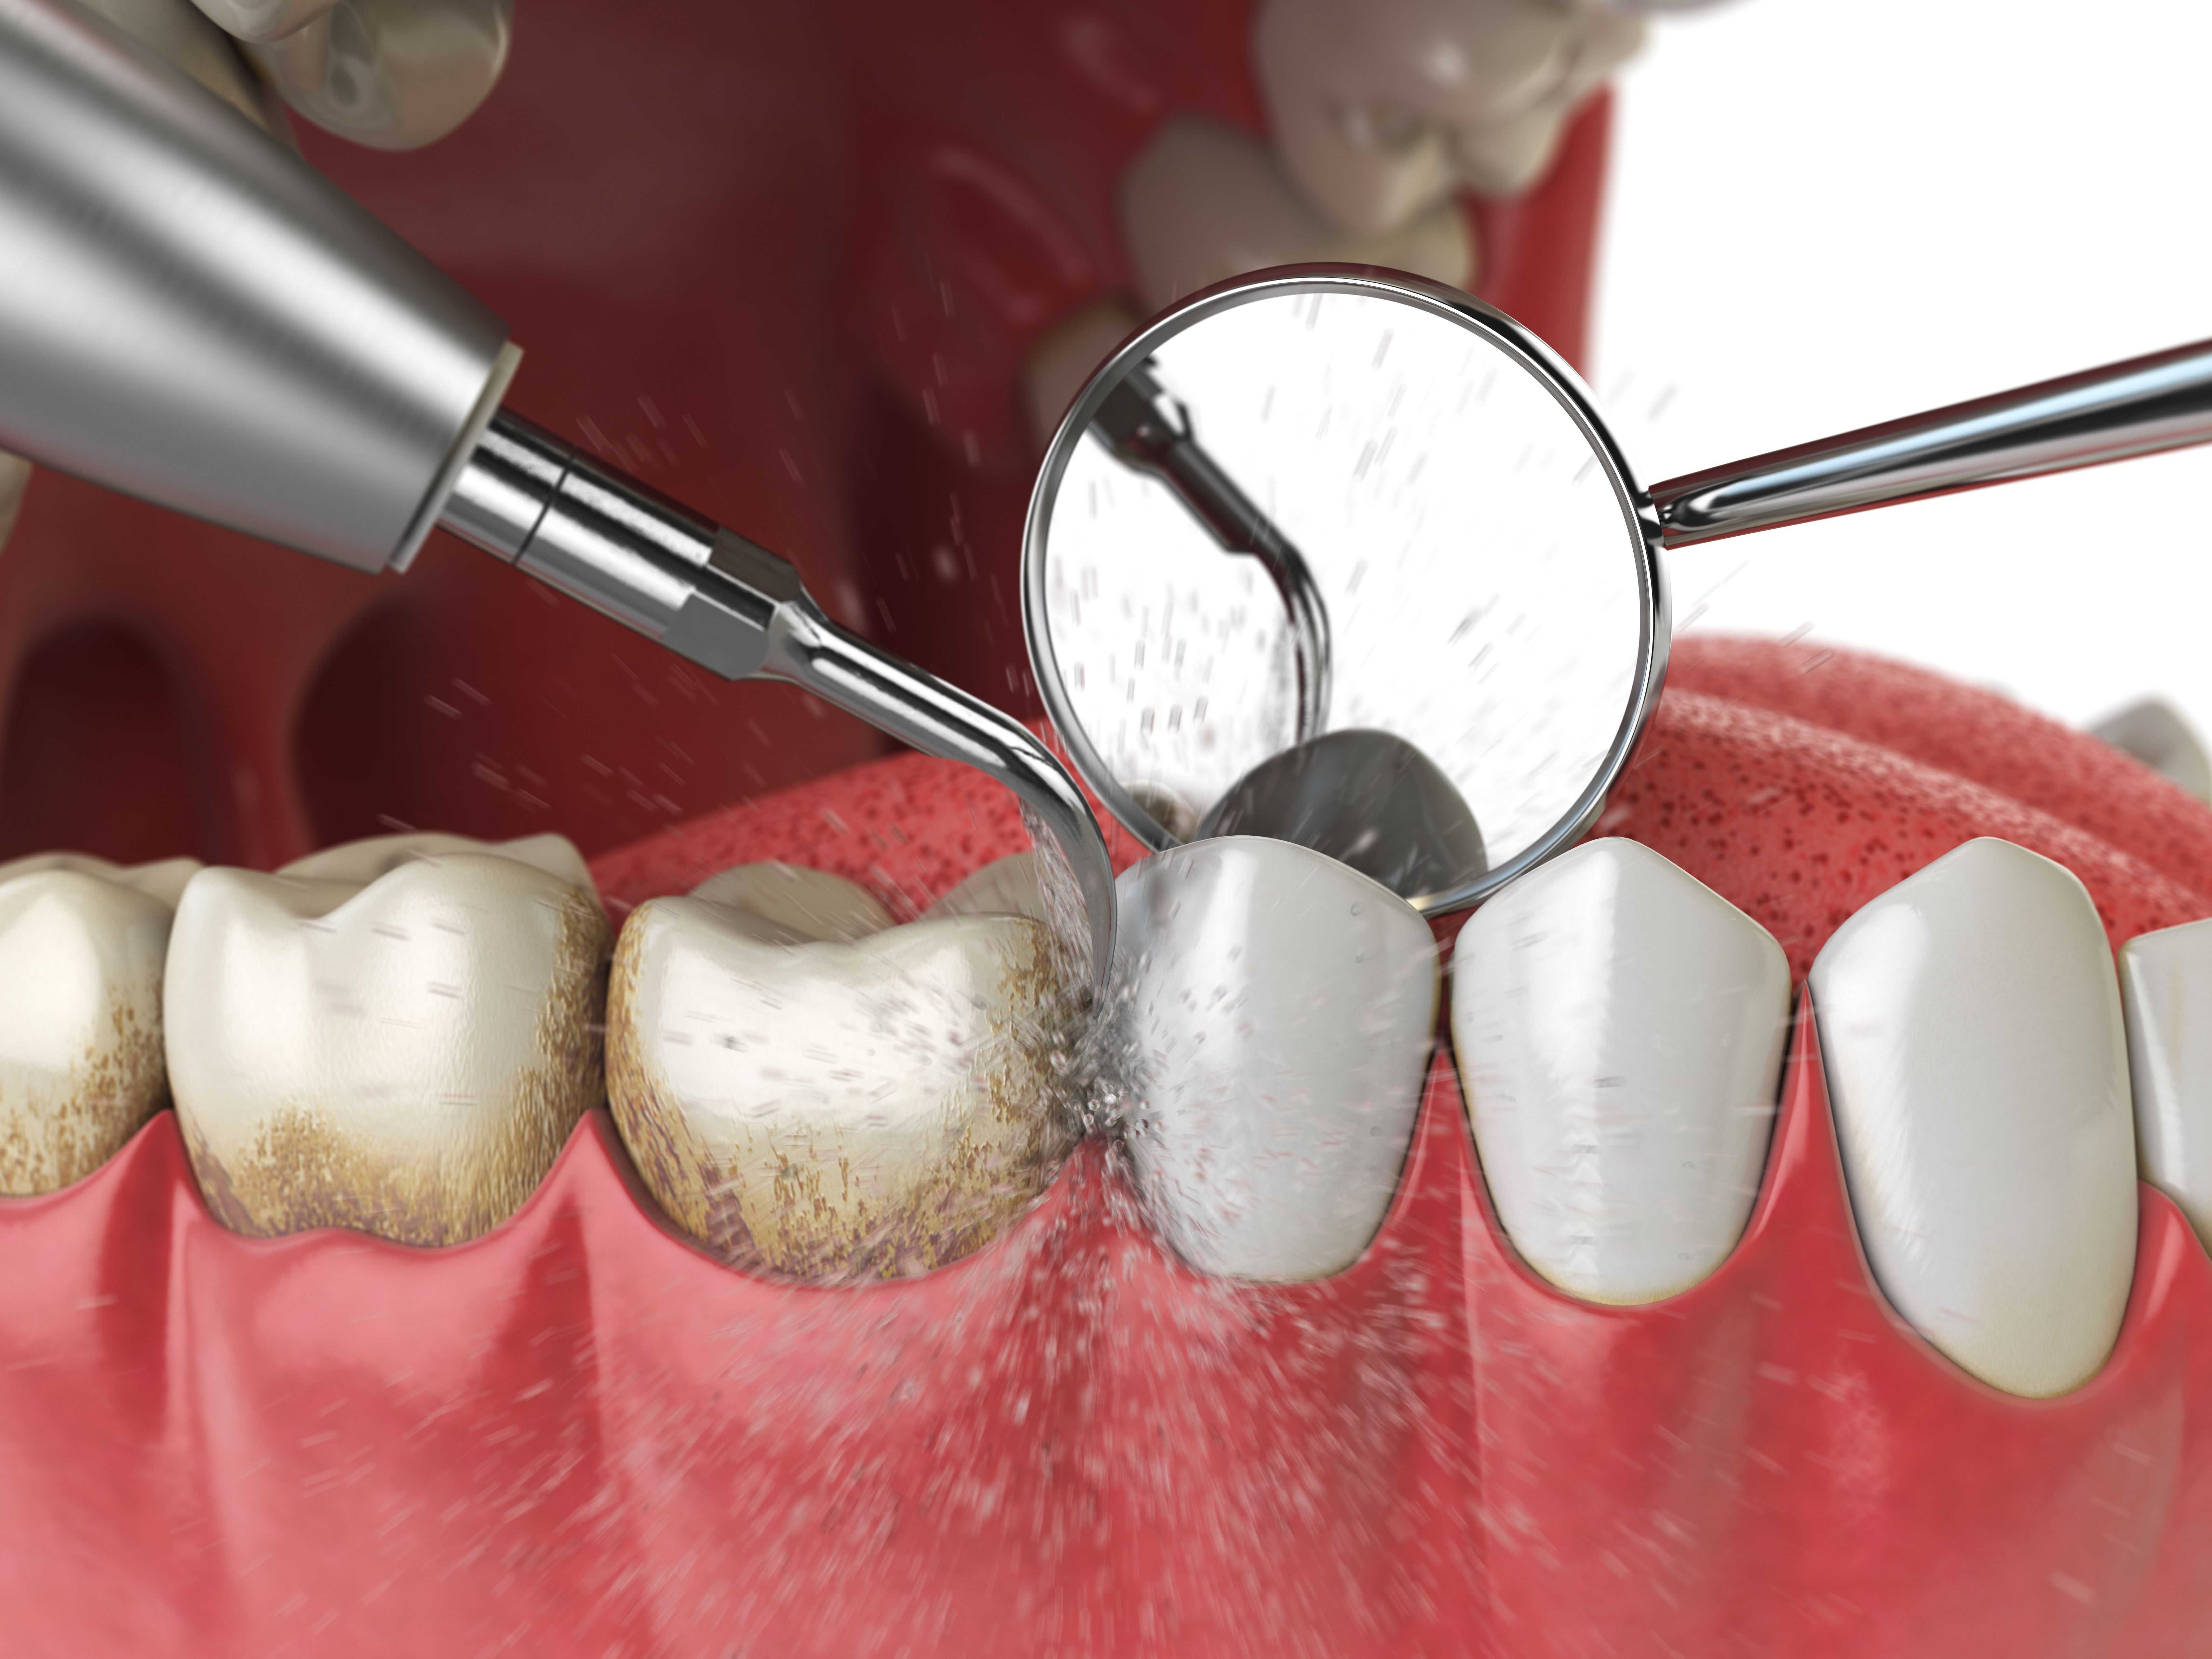 5 Types of Dental Cleanings